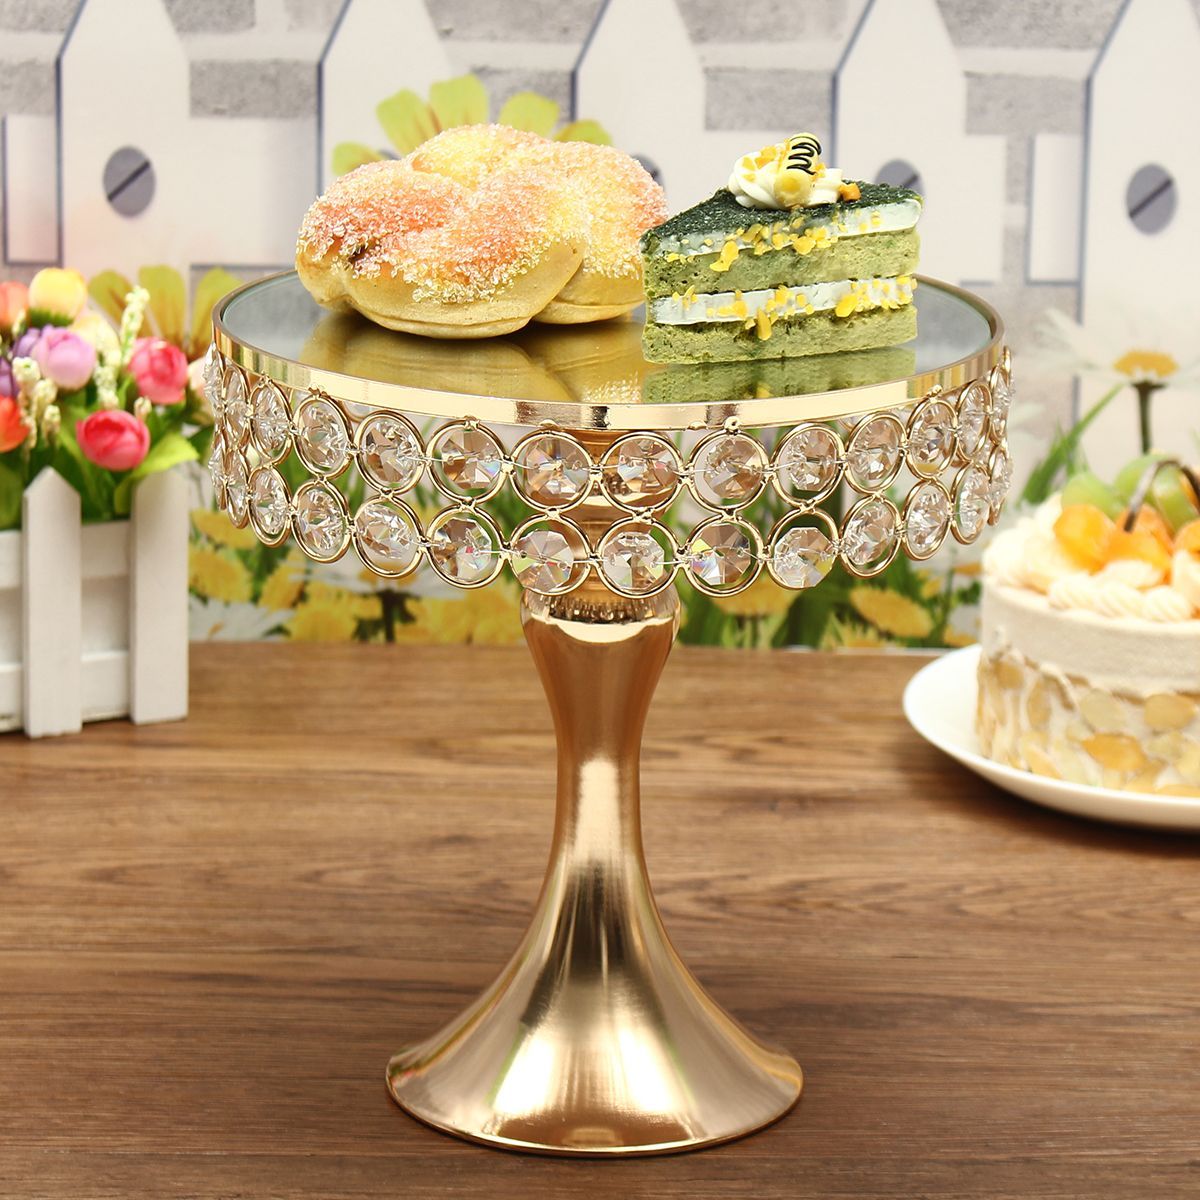 20cm-Vintage-Cake-Dessert-Holder-Mirror-Crystal-Stand-Round-Chic-Wedding-Party-Display-Decorations-1477069